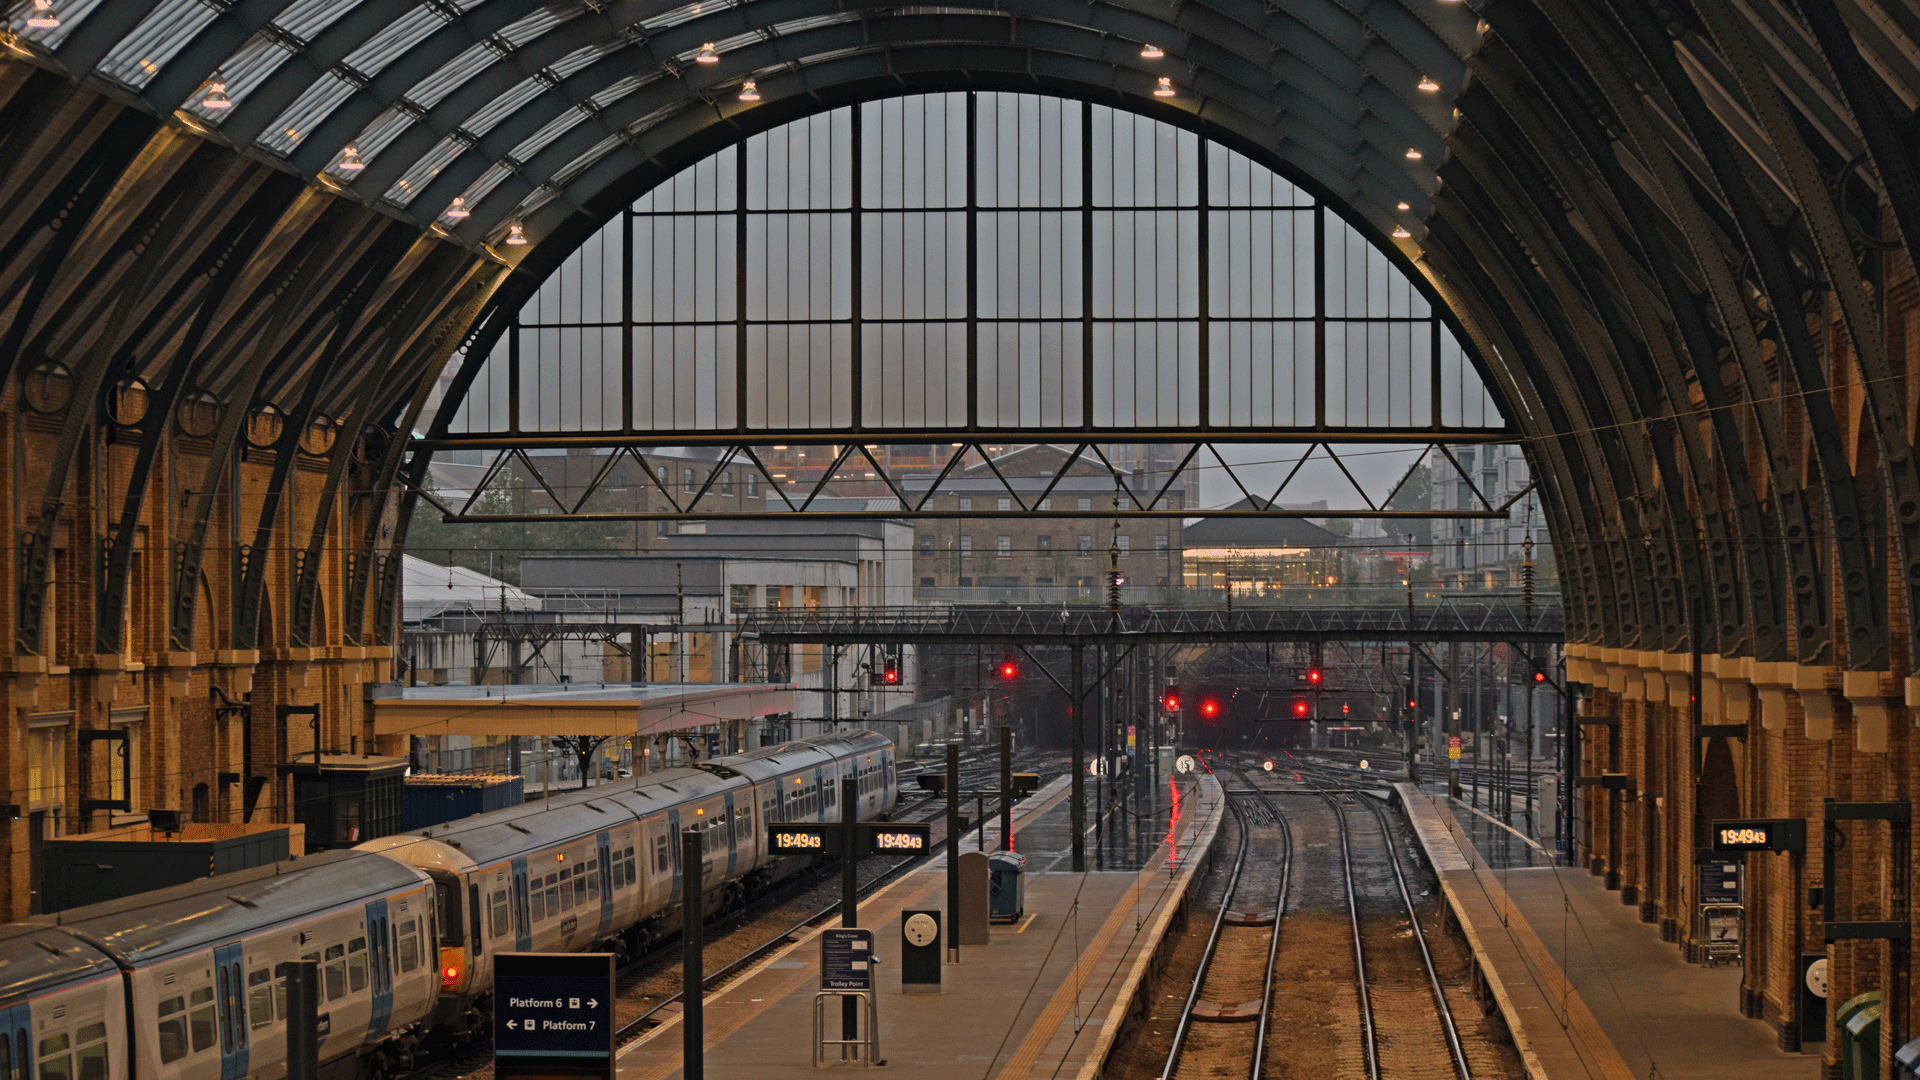 Kings Cross station